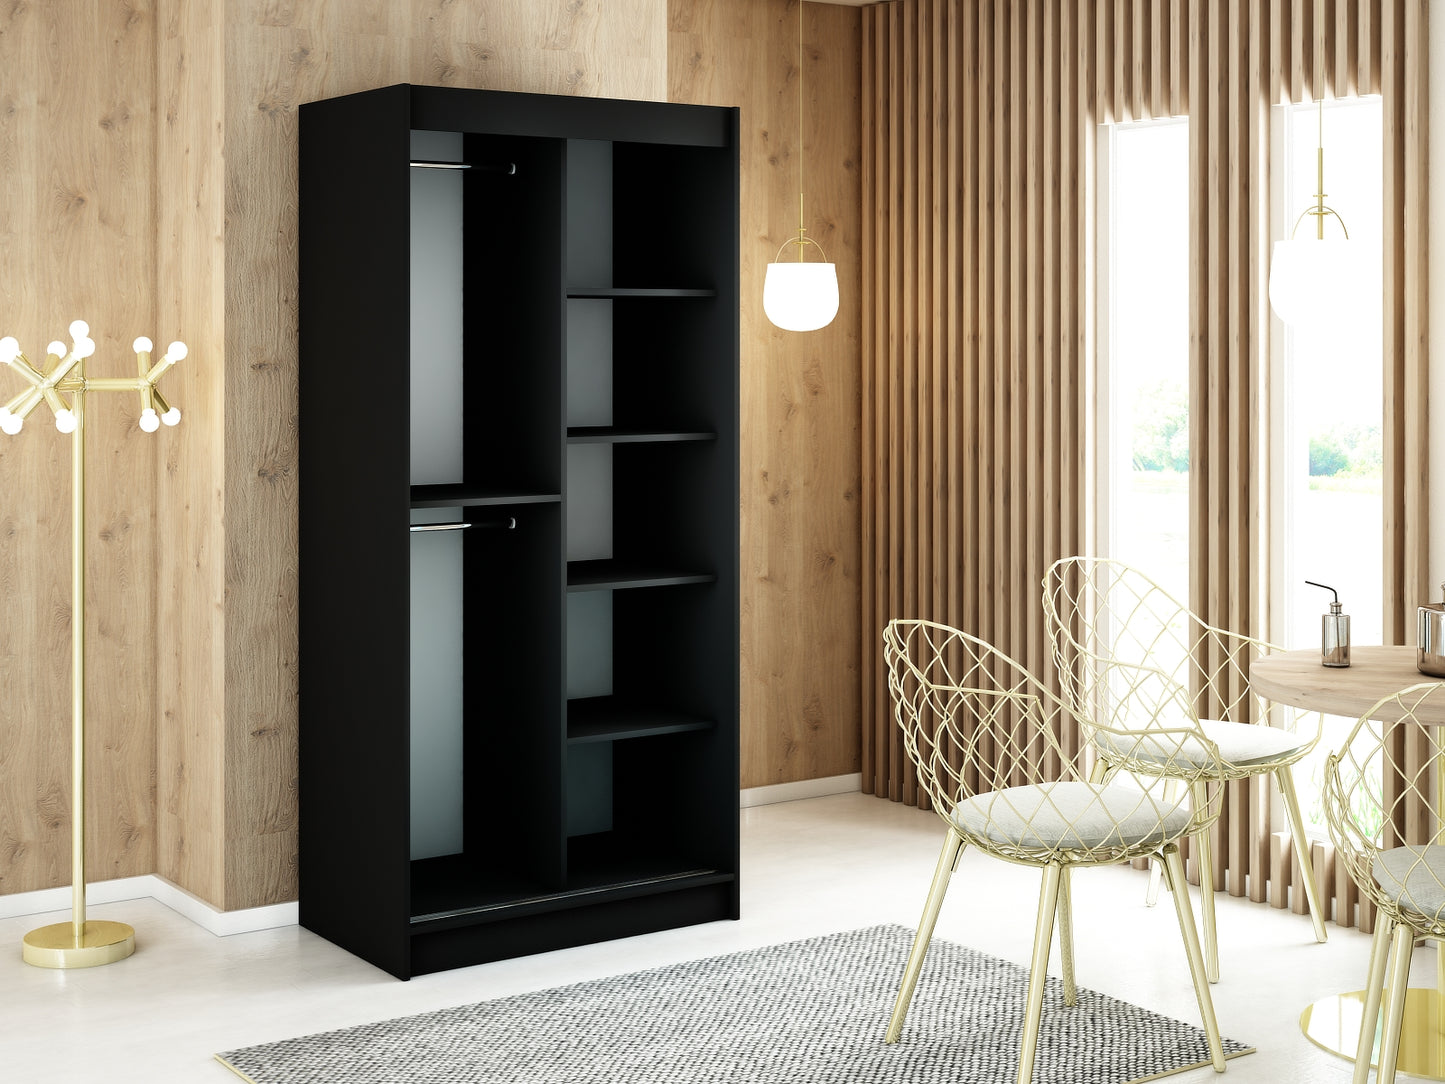 MANU T - Wardrobe Sliding Doors Black Matt + Golden Handles Shelves Rails Optional Drawers >100cm<